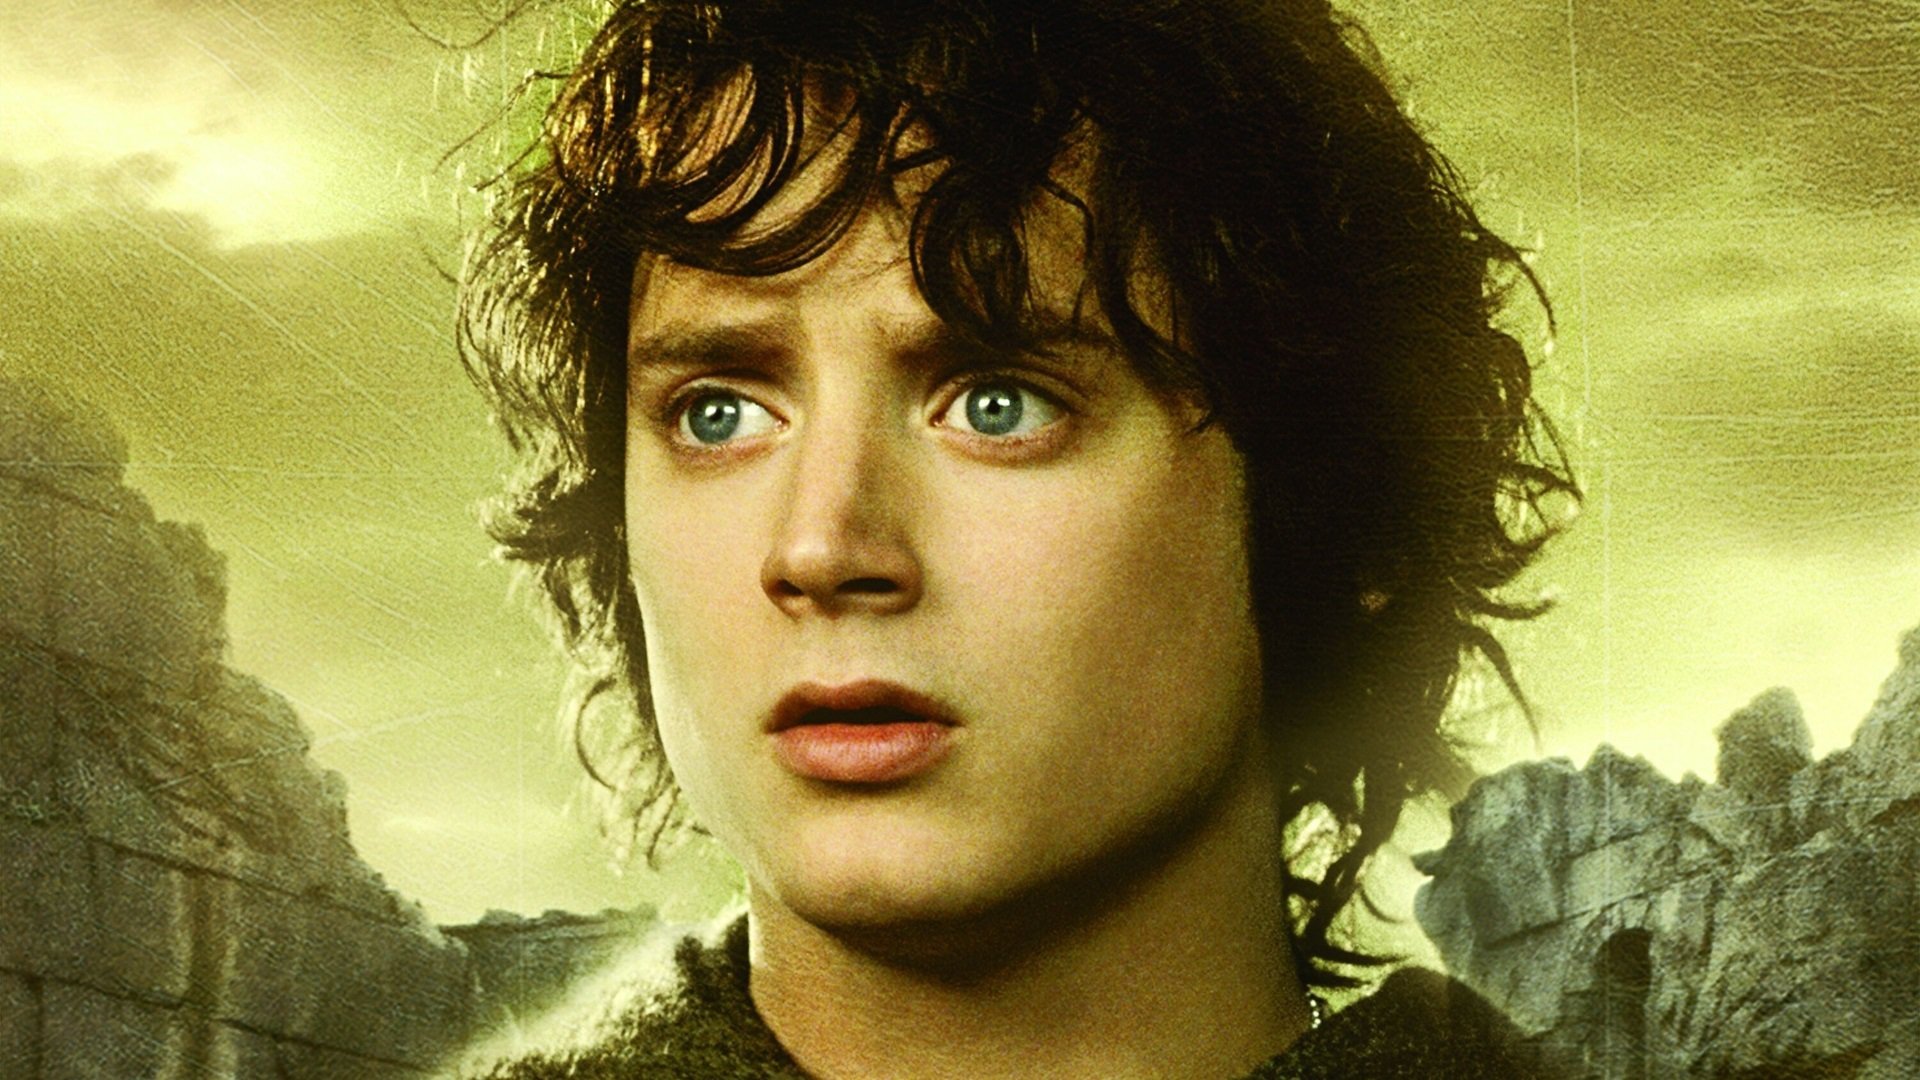 Властелин колец питер. Хоббит Фродо. Властелин колец Фродо. Фродо Бэггинс Властелин колец. Властелин колец братство кольца Фродо.